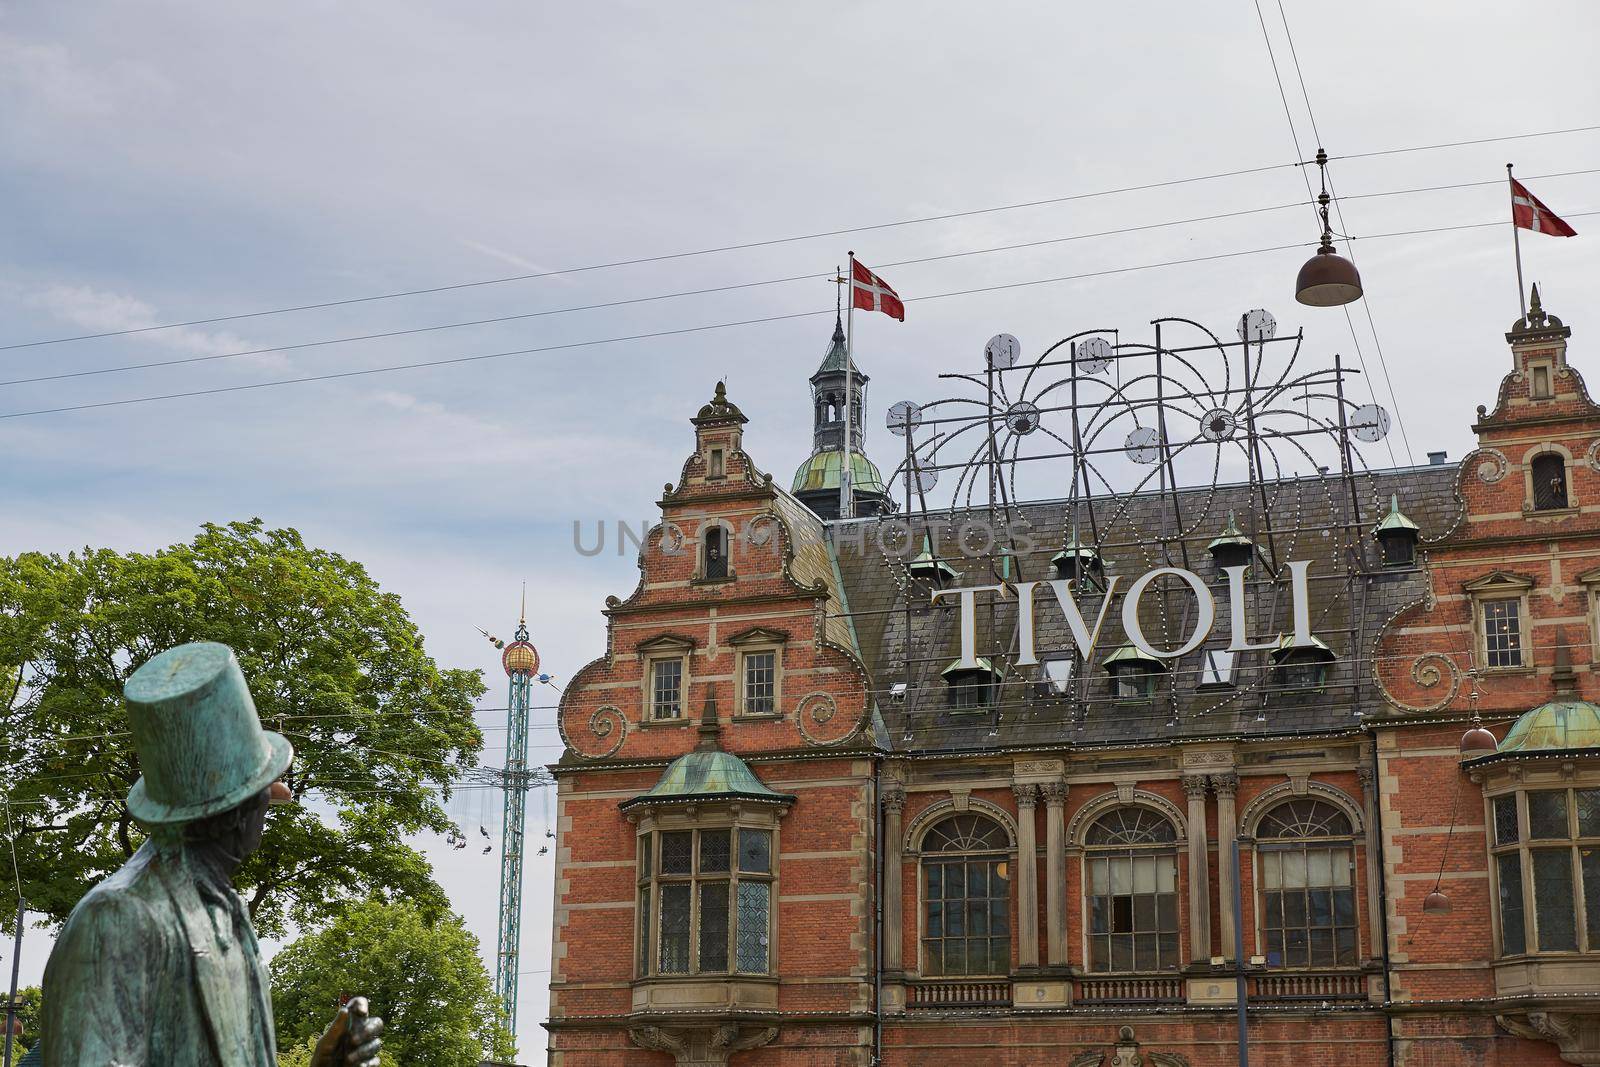 Statue of H. Ch. Andersen and Tivoli amusement park in Copenhagen, Denmark by wondry